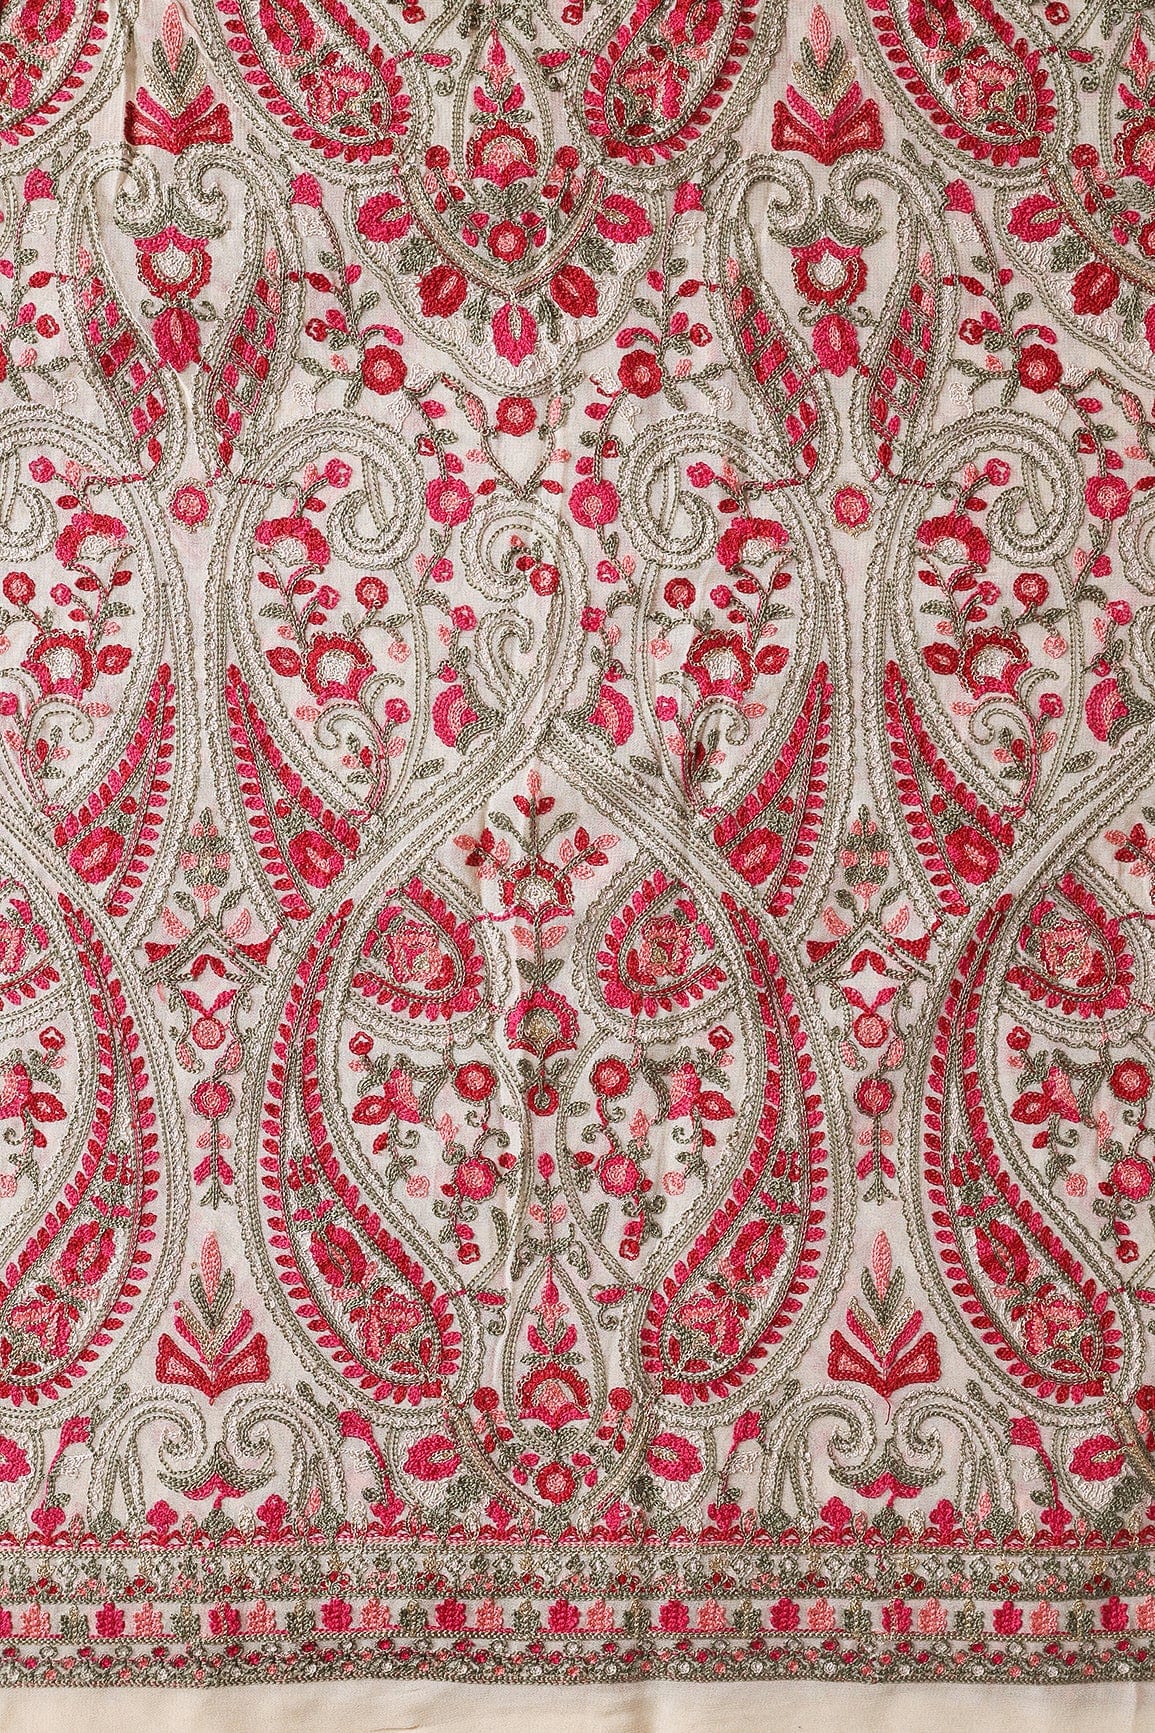 doeraa Embroidery Fabrics Multi Thread With Zari Paisley Embroidery On Beige Viscose Georgette Fabric